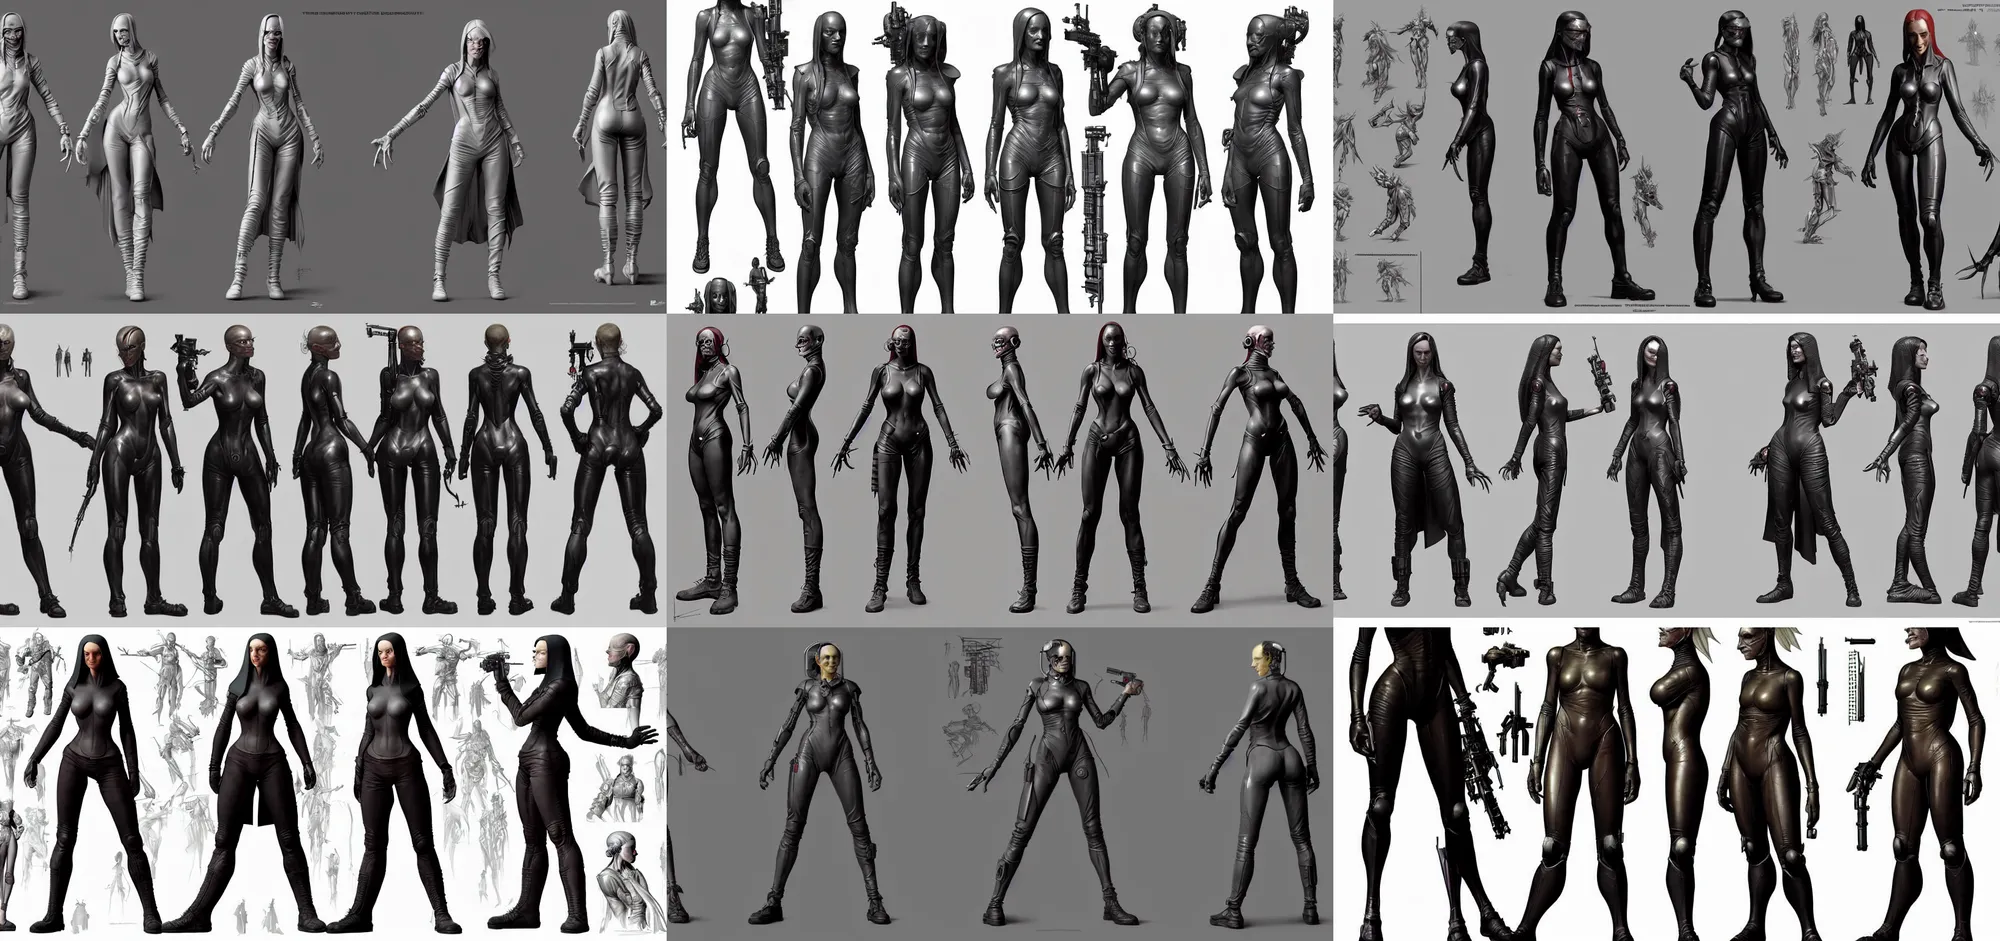 Prompt: character model sheet, badass cyberpunk girl, by thomas blackshear and hieronymus bosch and weta workshop